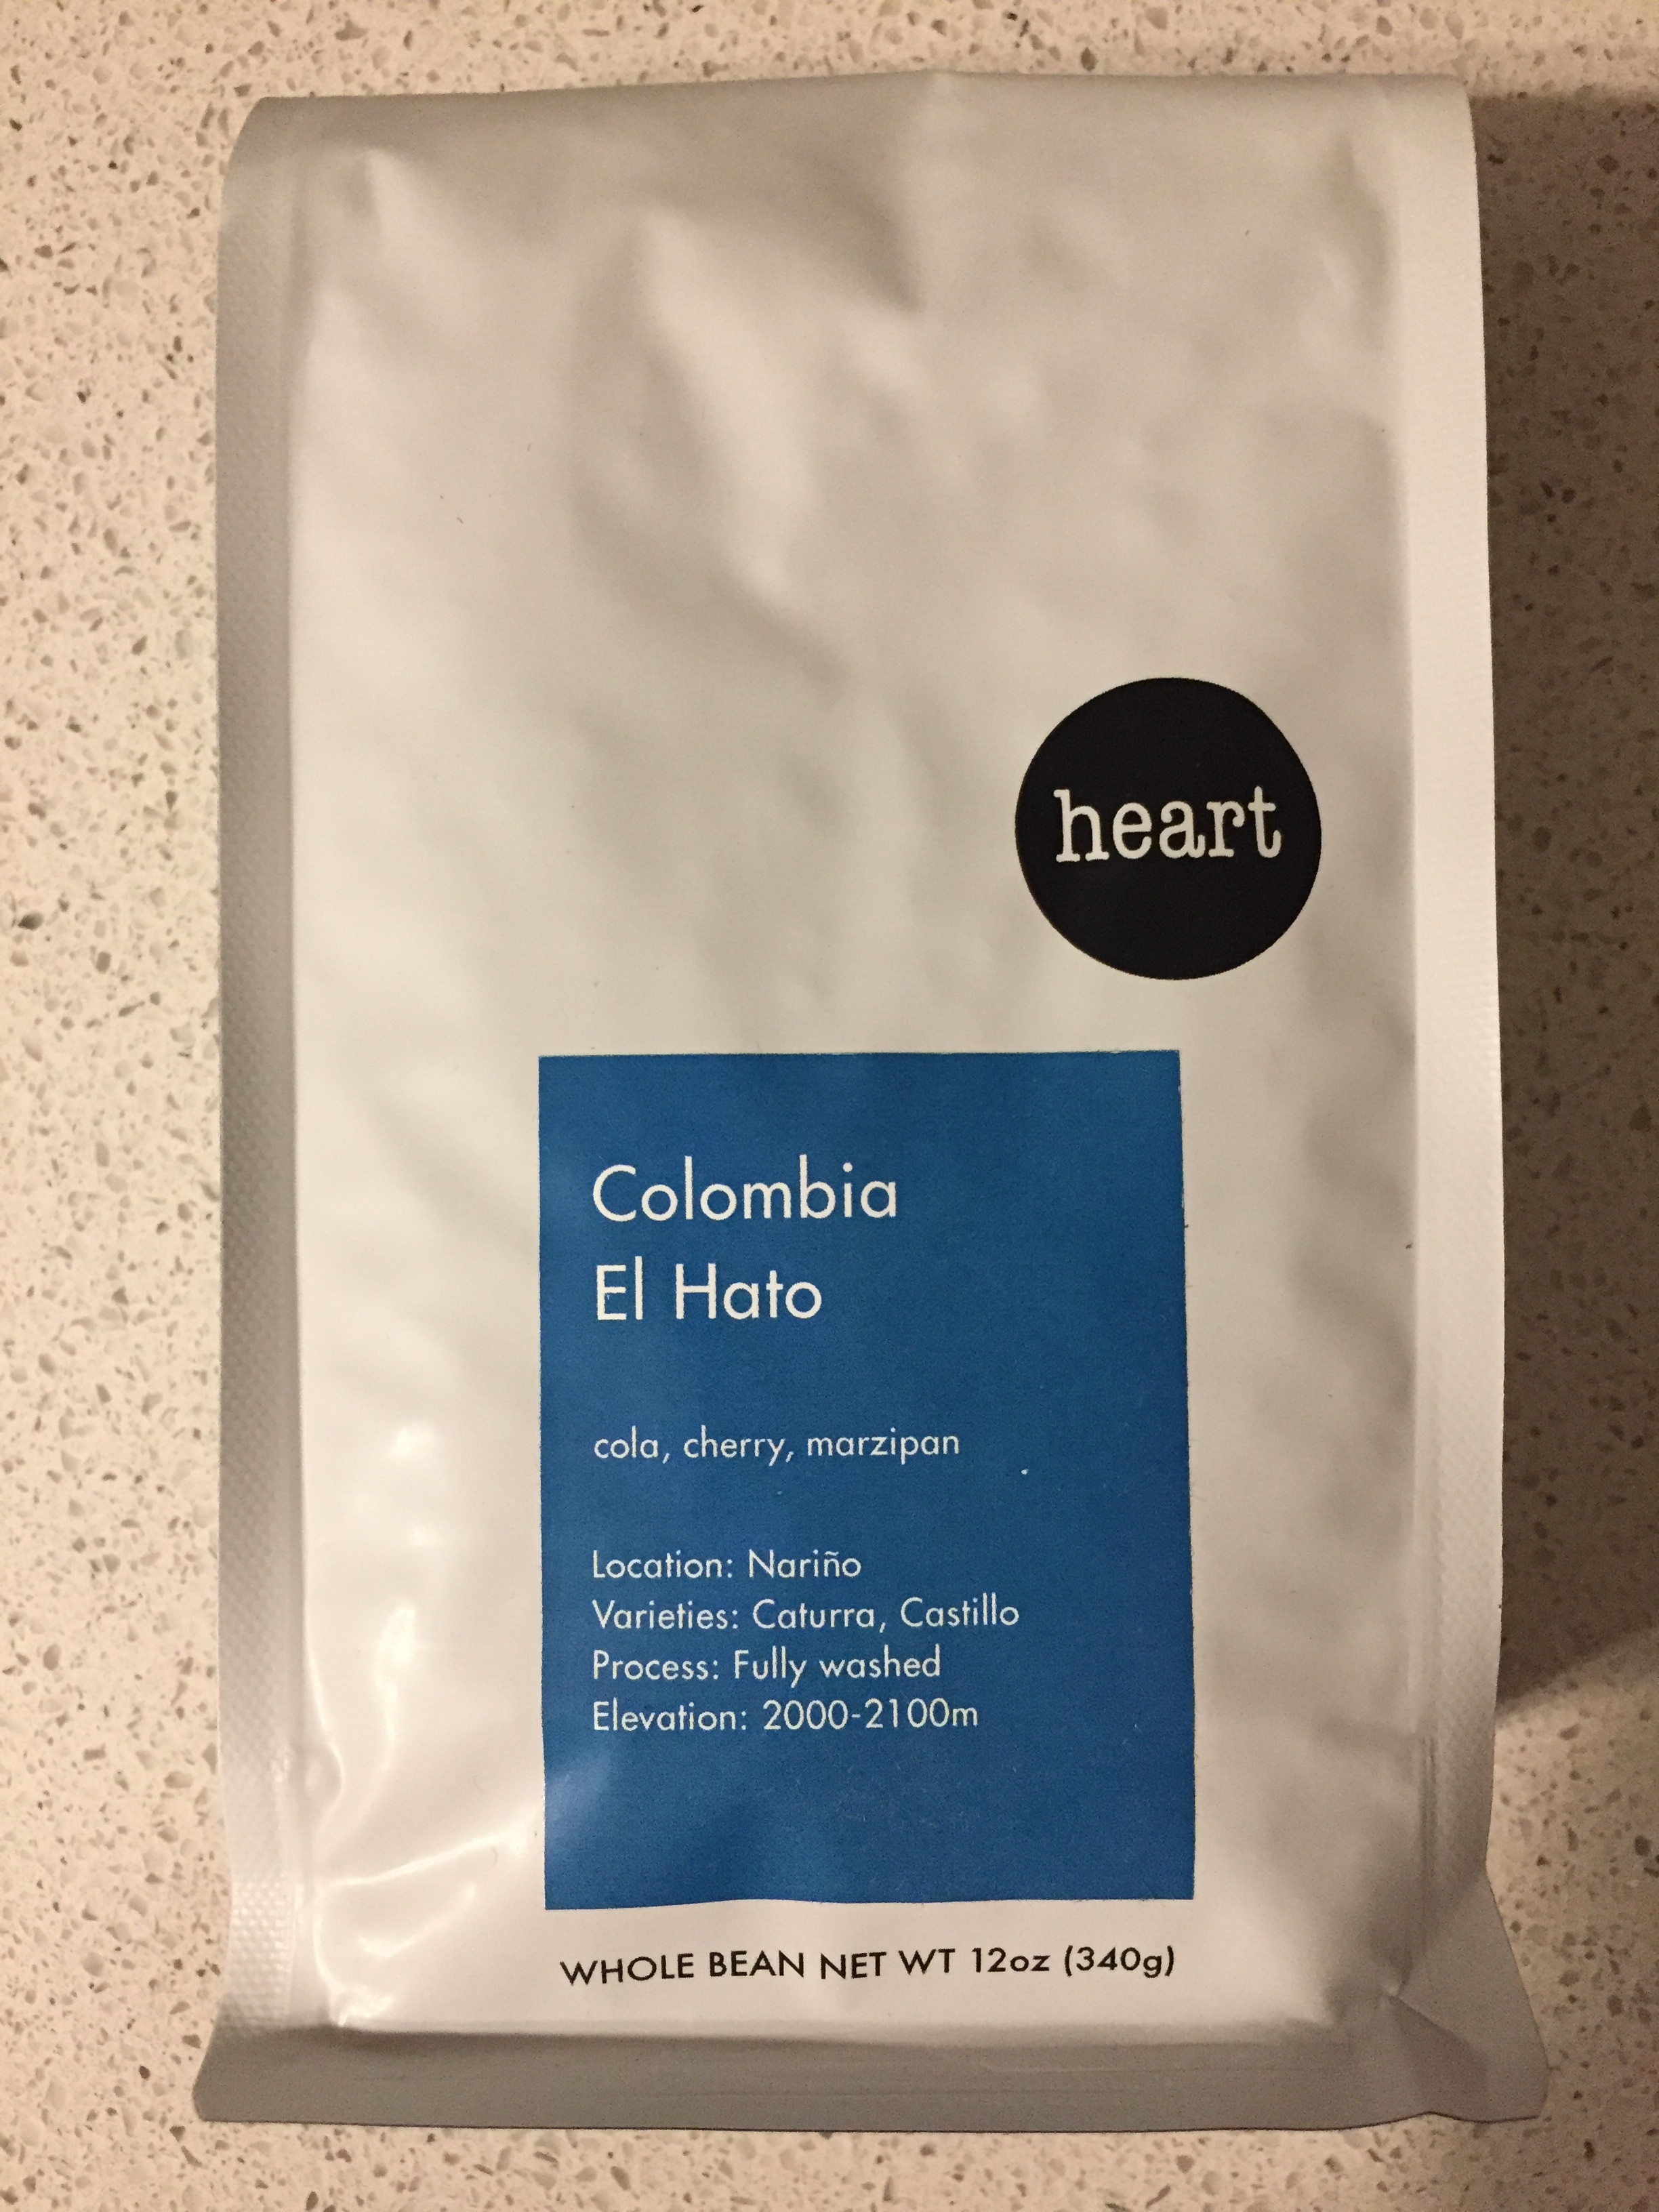 Heart Coffee Roaster Colombia El Hato.JPG